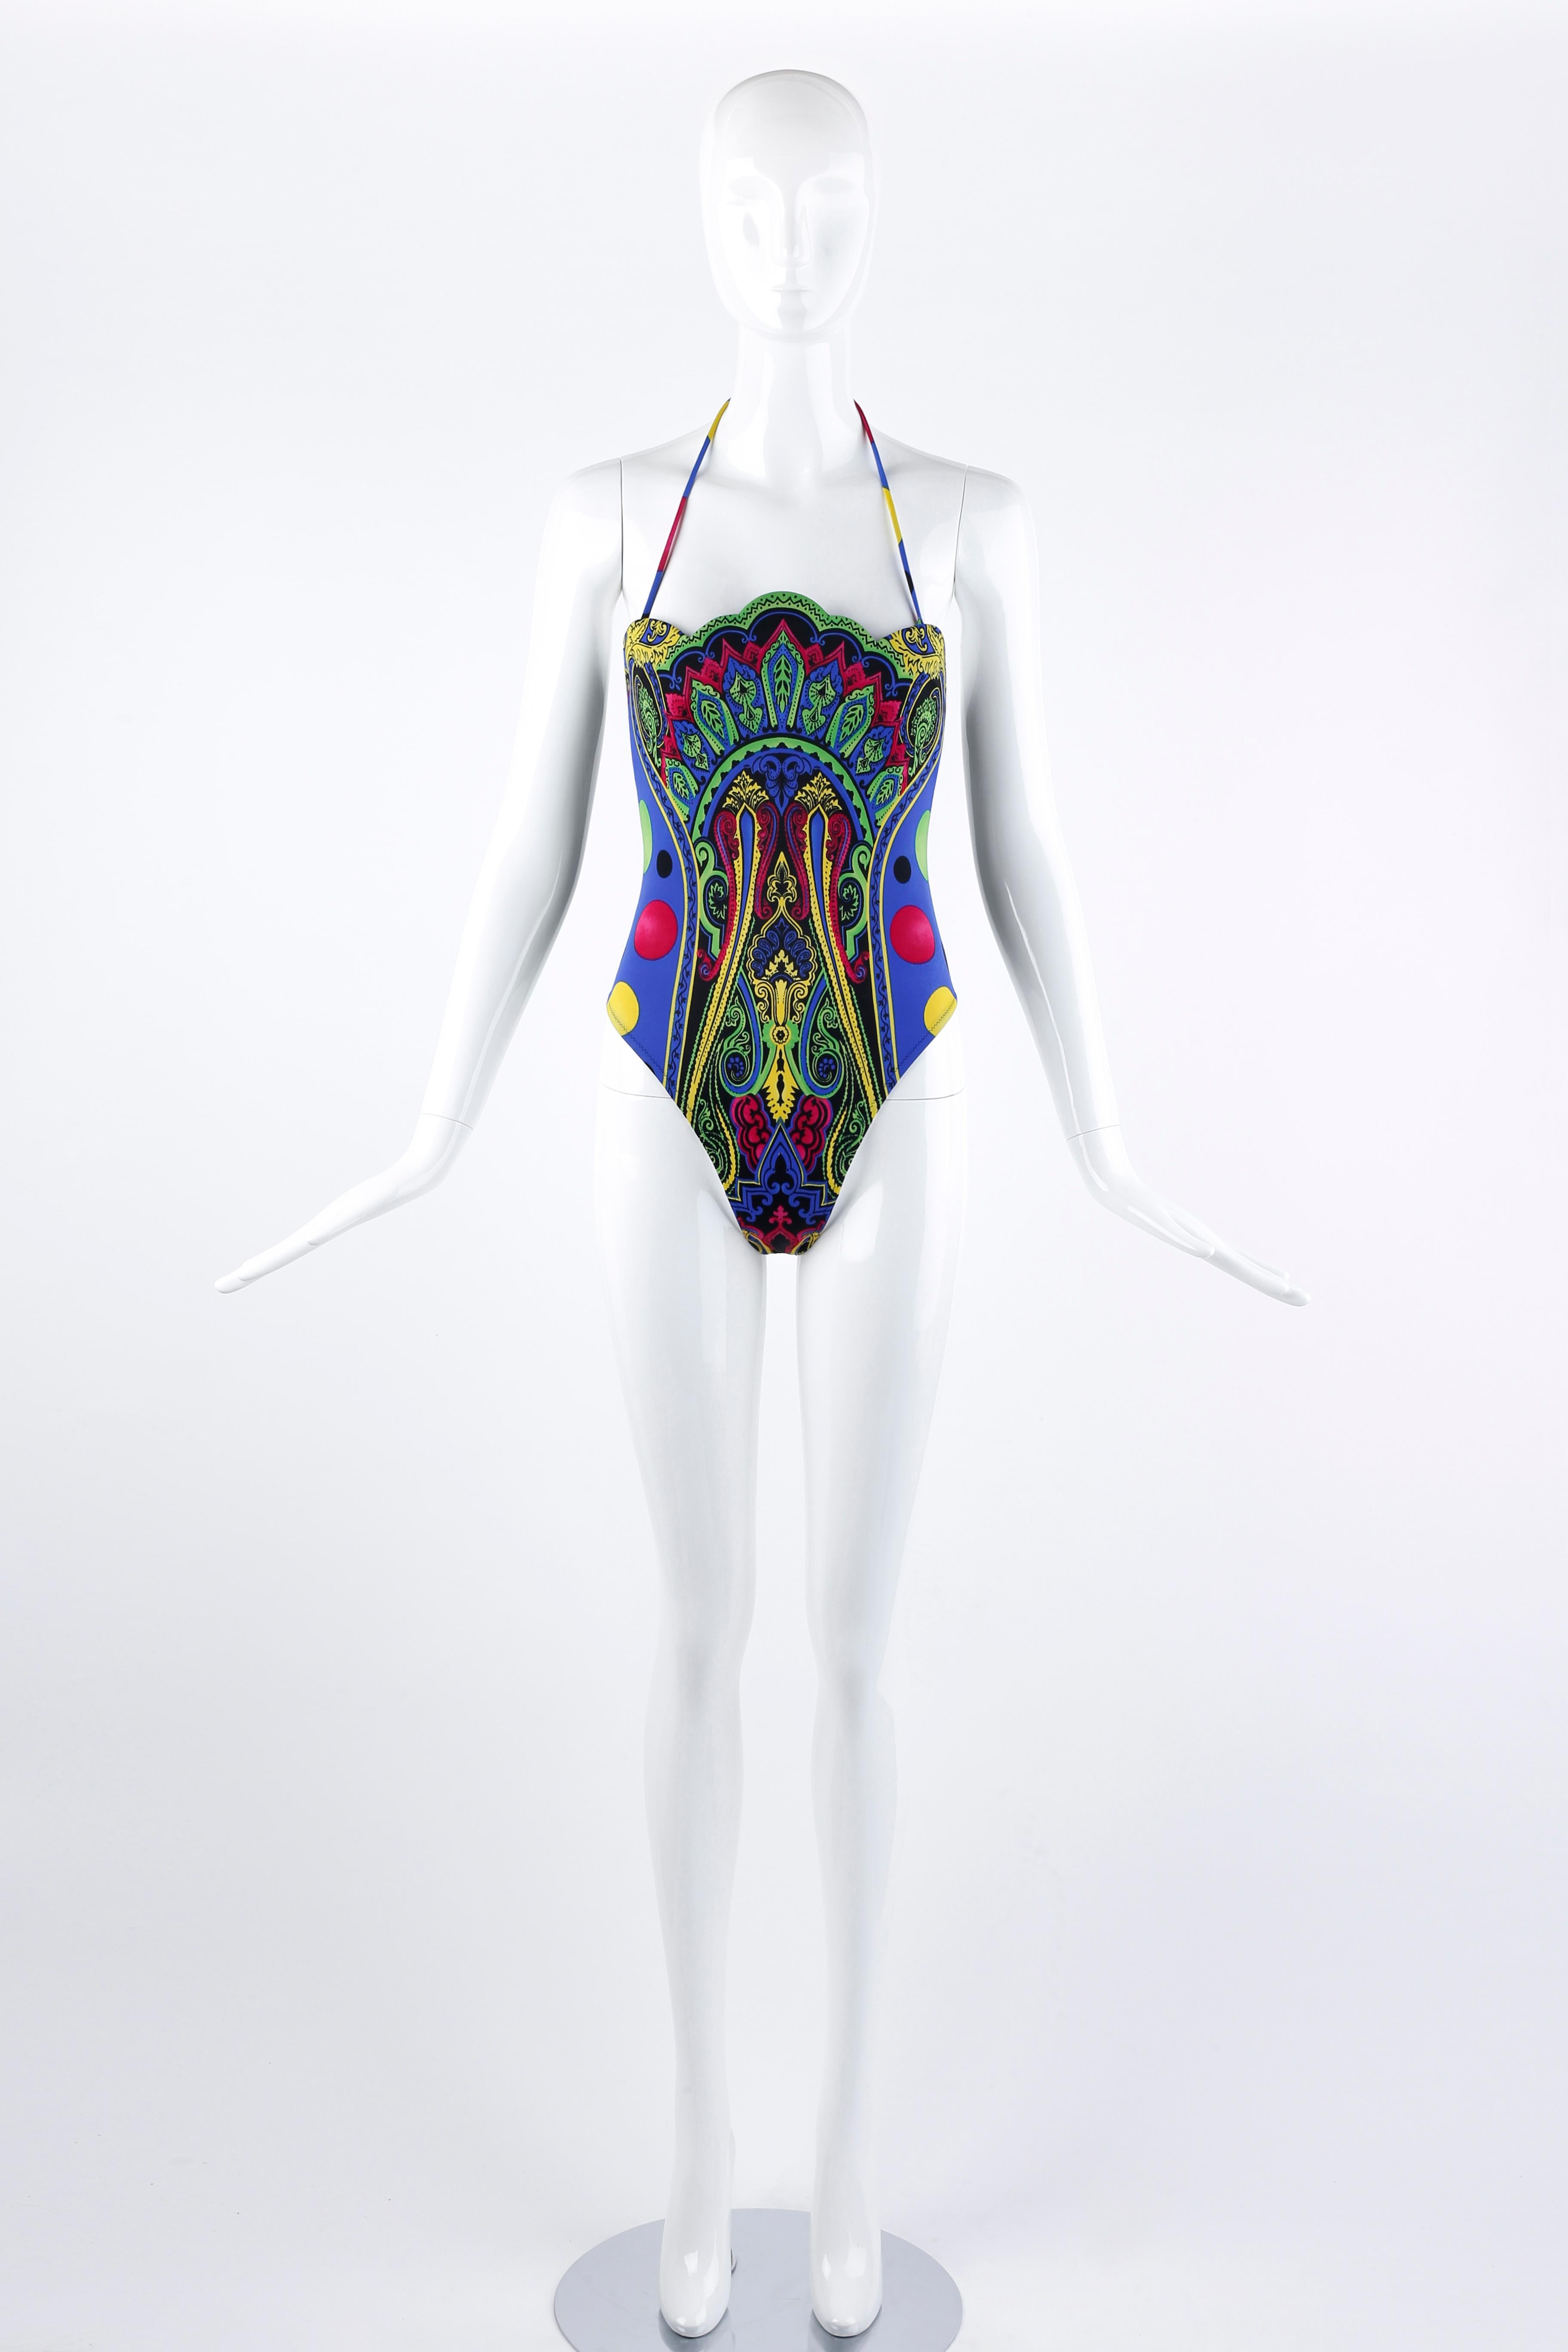 Gris Gianni Versace S/S 1991 Pop Art Baroque Print Swimsuit Bodysuit & Skirt Set en vente